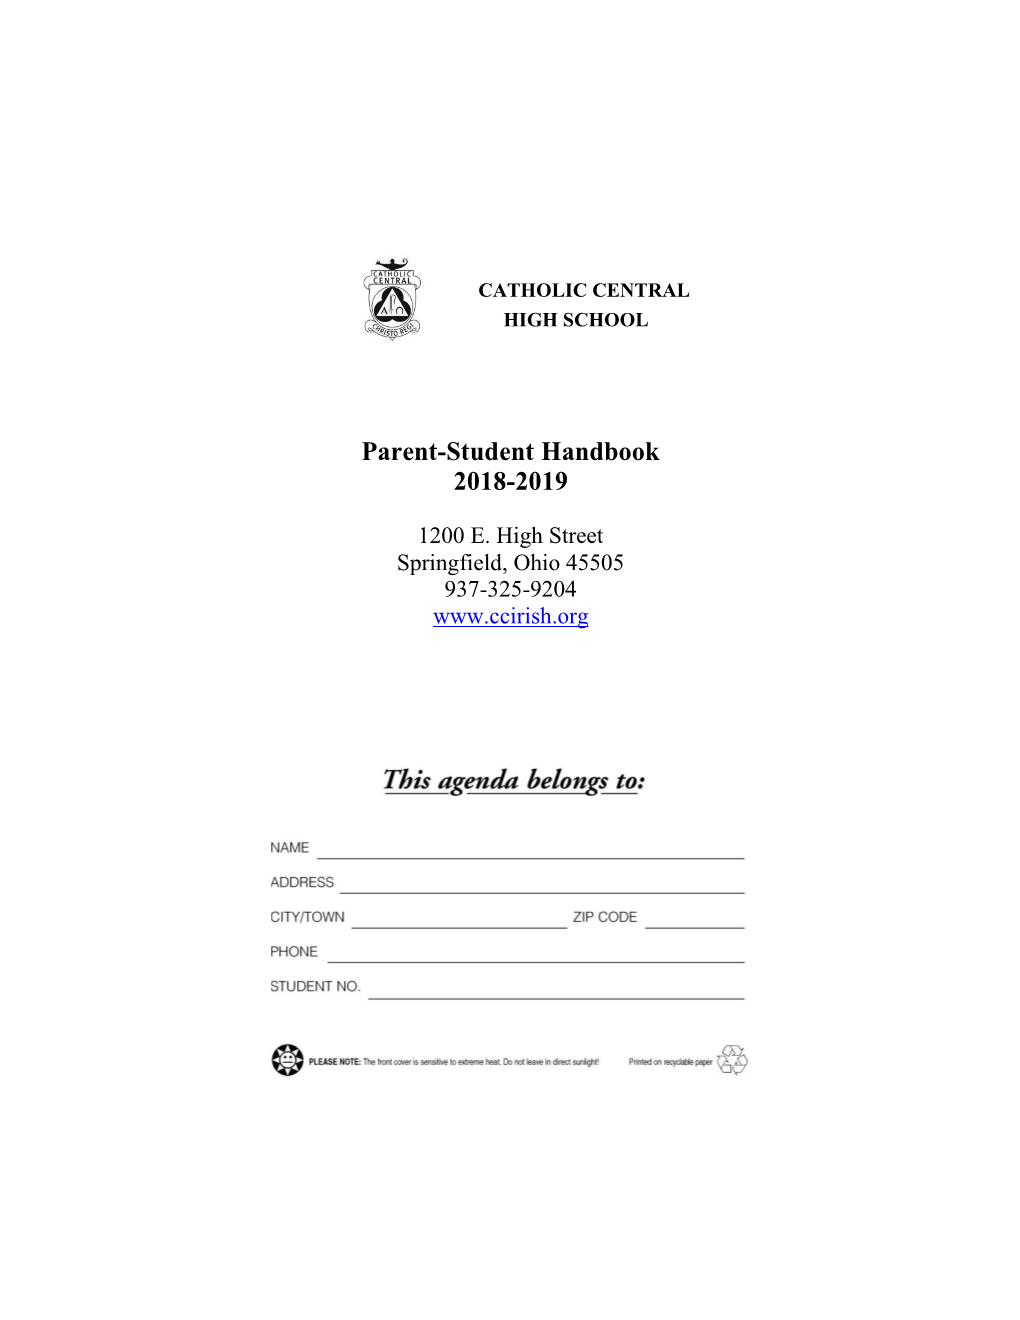 Parent-Student Handbook 2018-2019